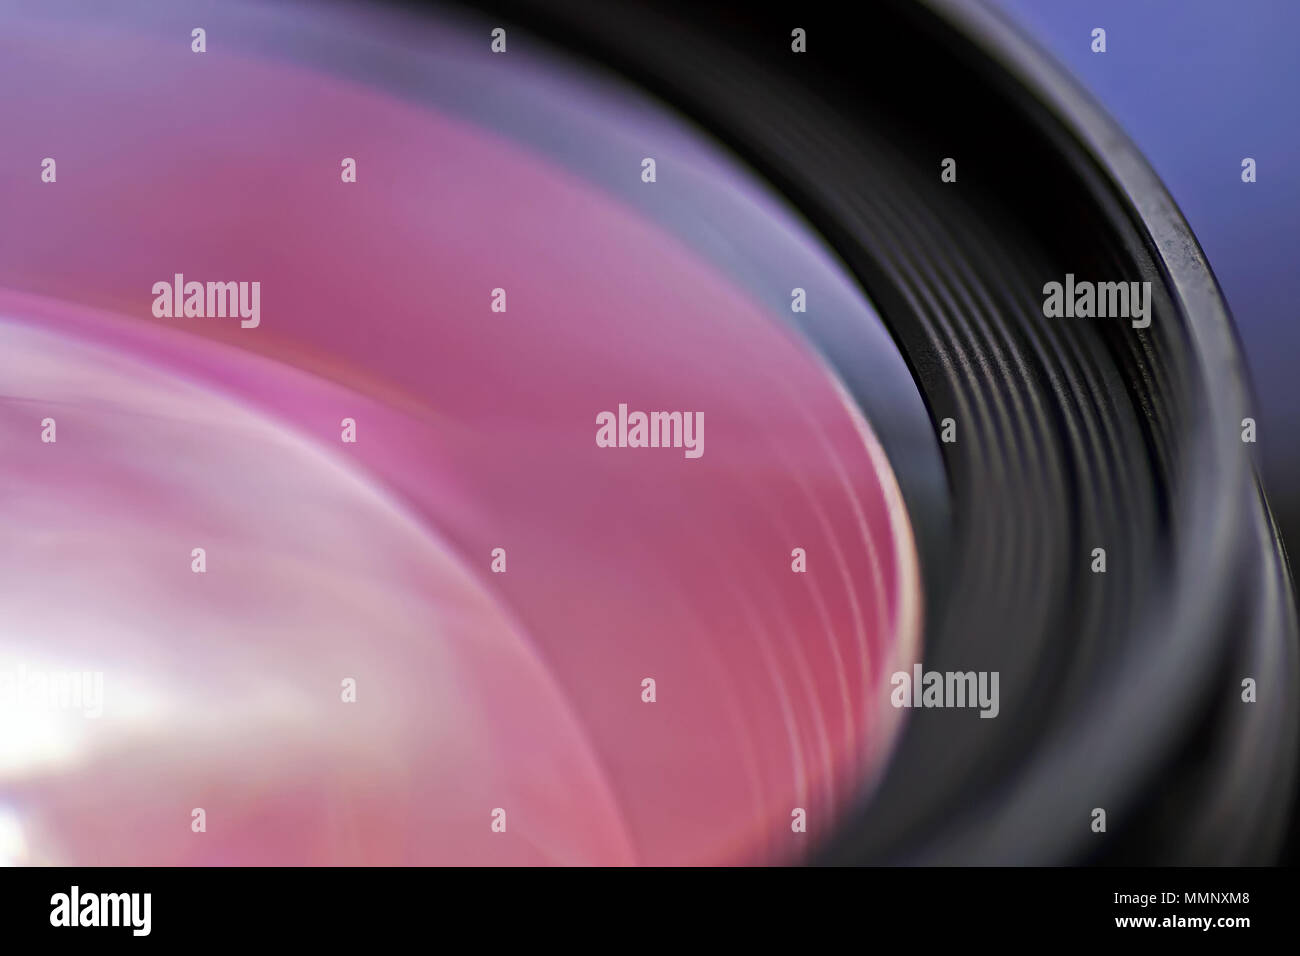 The distinctive anti-reflective coating of a camera lens. Stock Photo